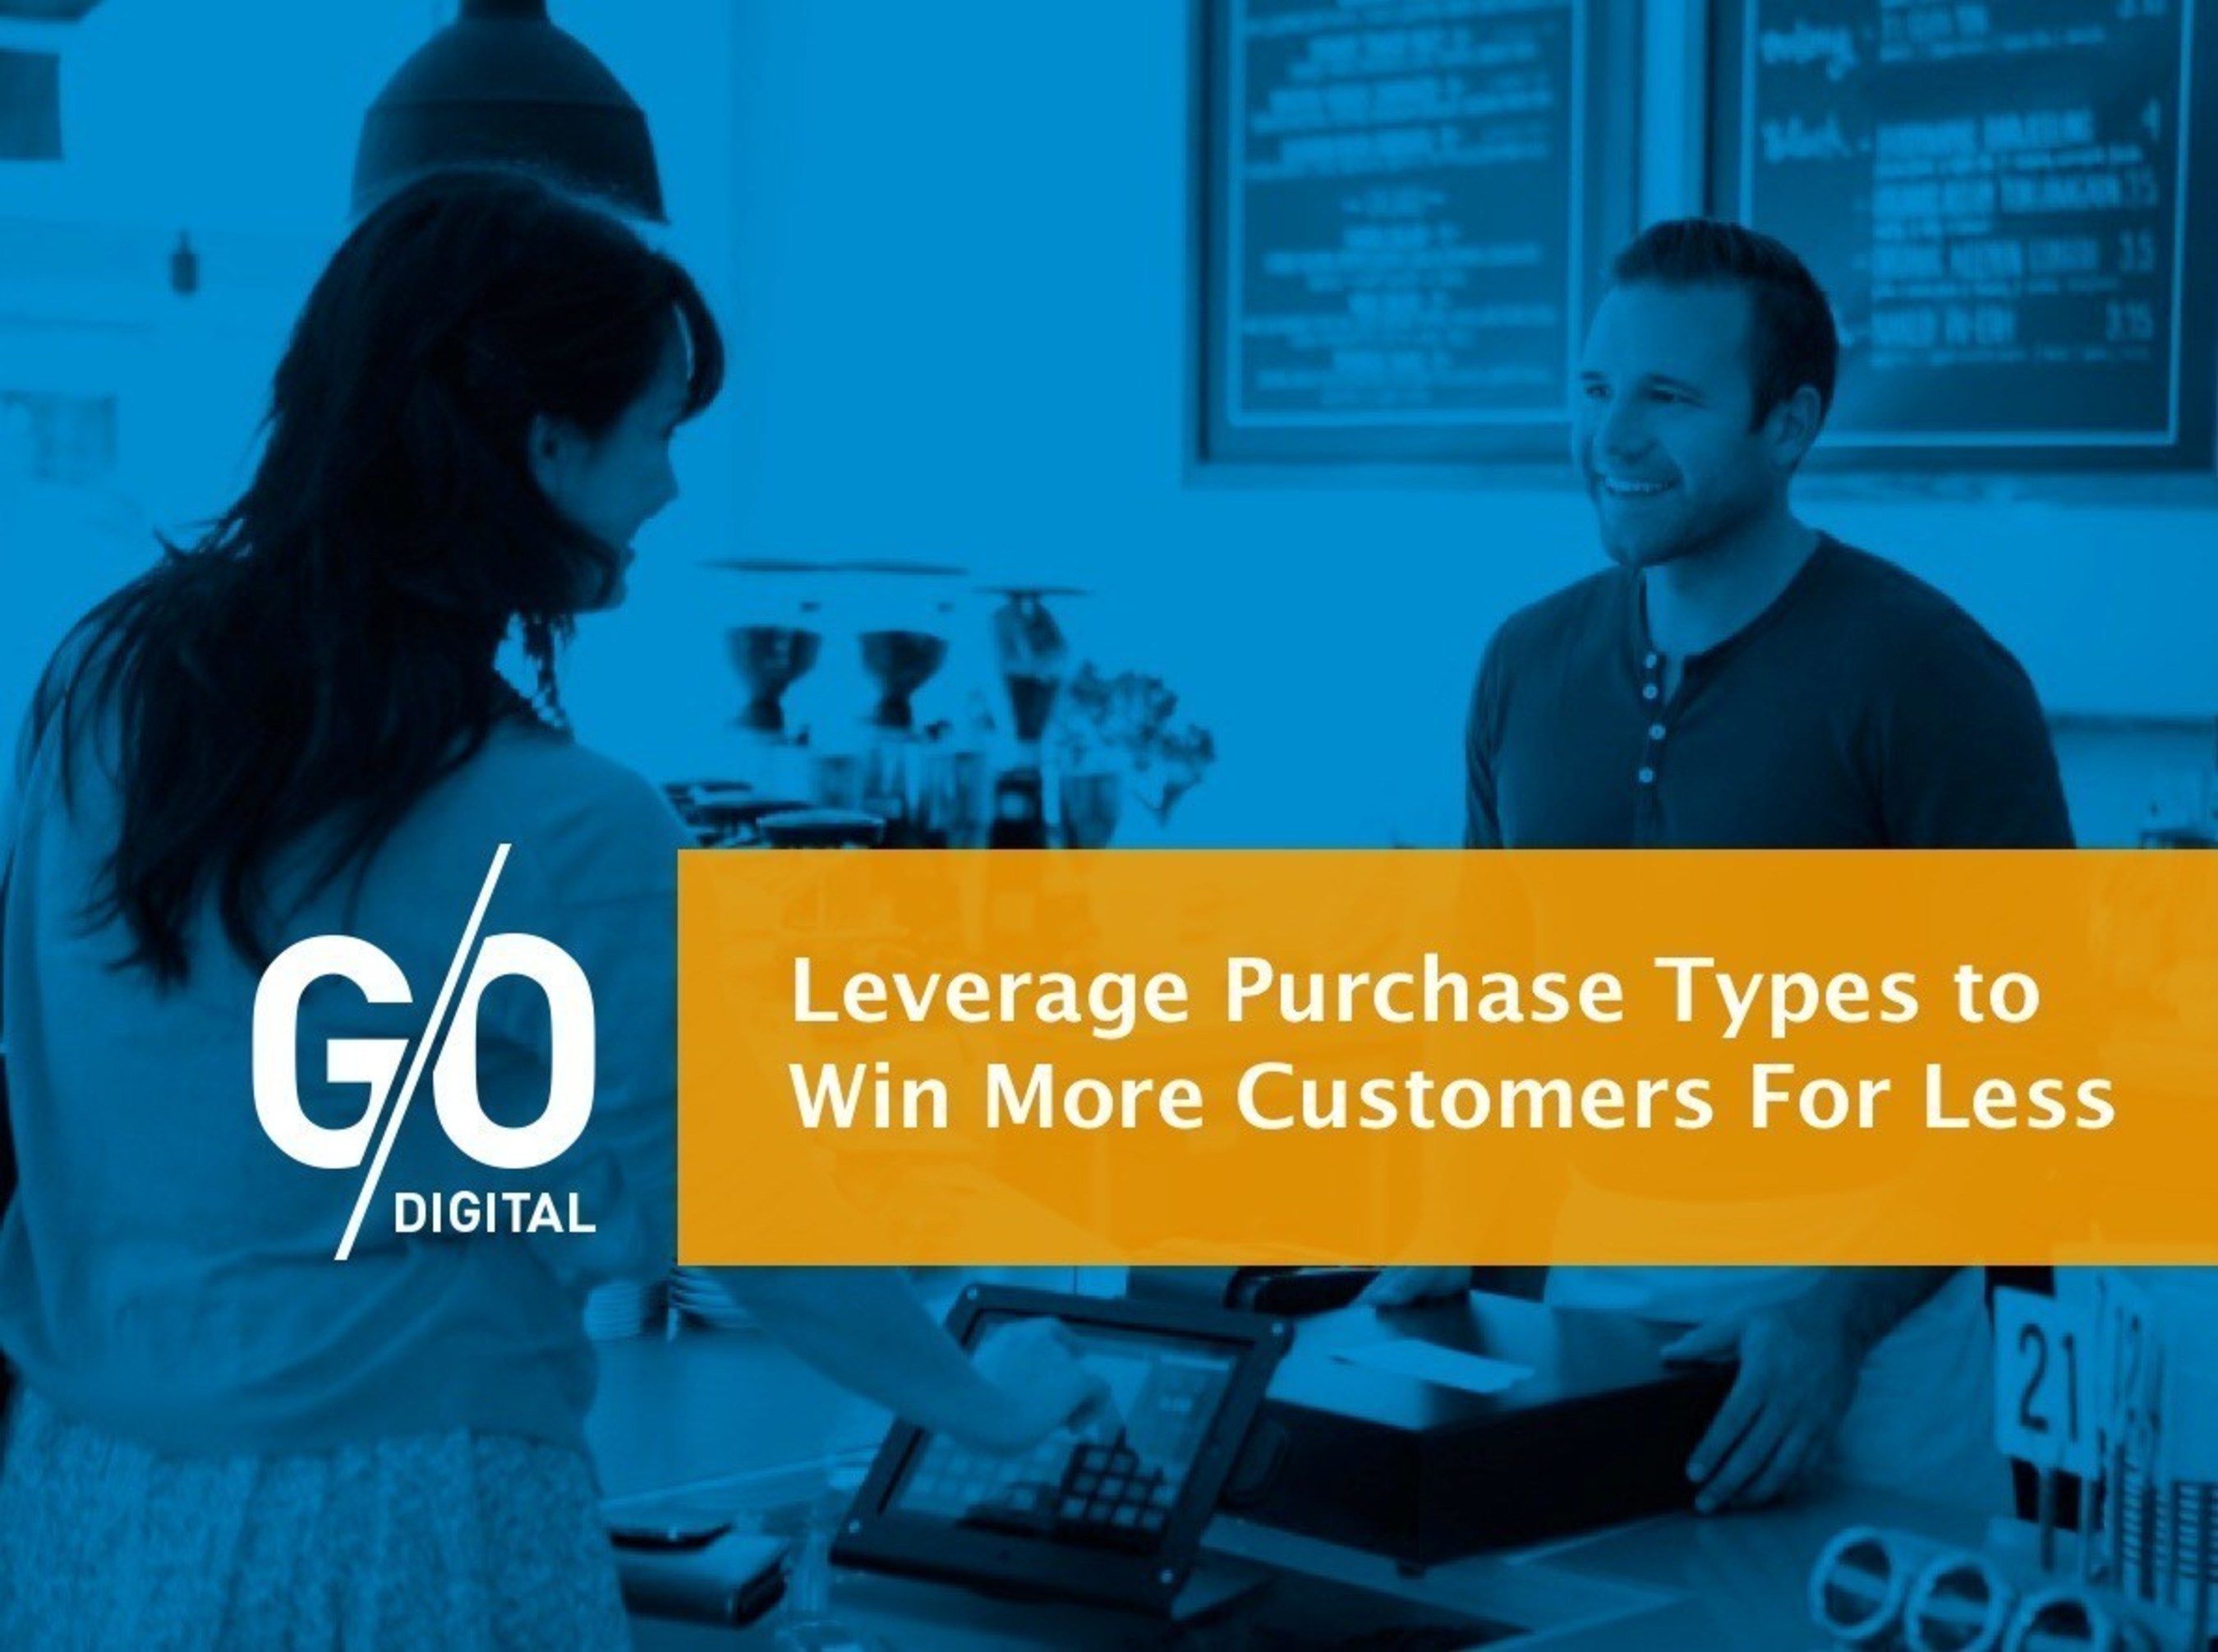 G/O Digital to share valuable marketing trade secrets during free webinar on October 27, 2015.